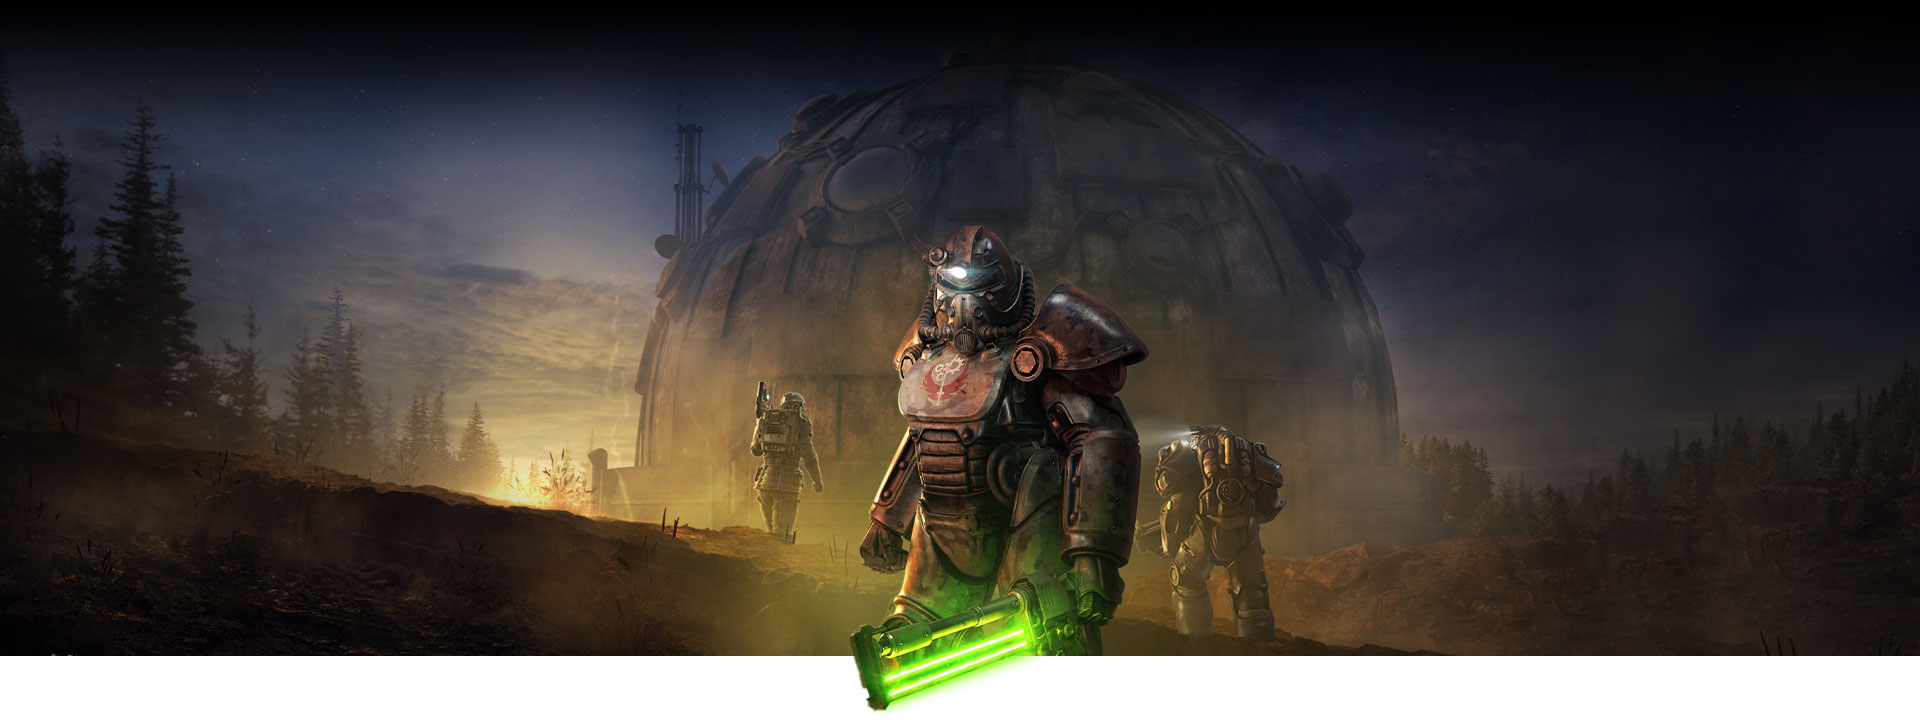 Karakter i Power Armor holder et glødende nærkampsvåben foran en stor kuppelbygning